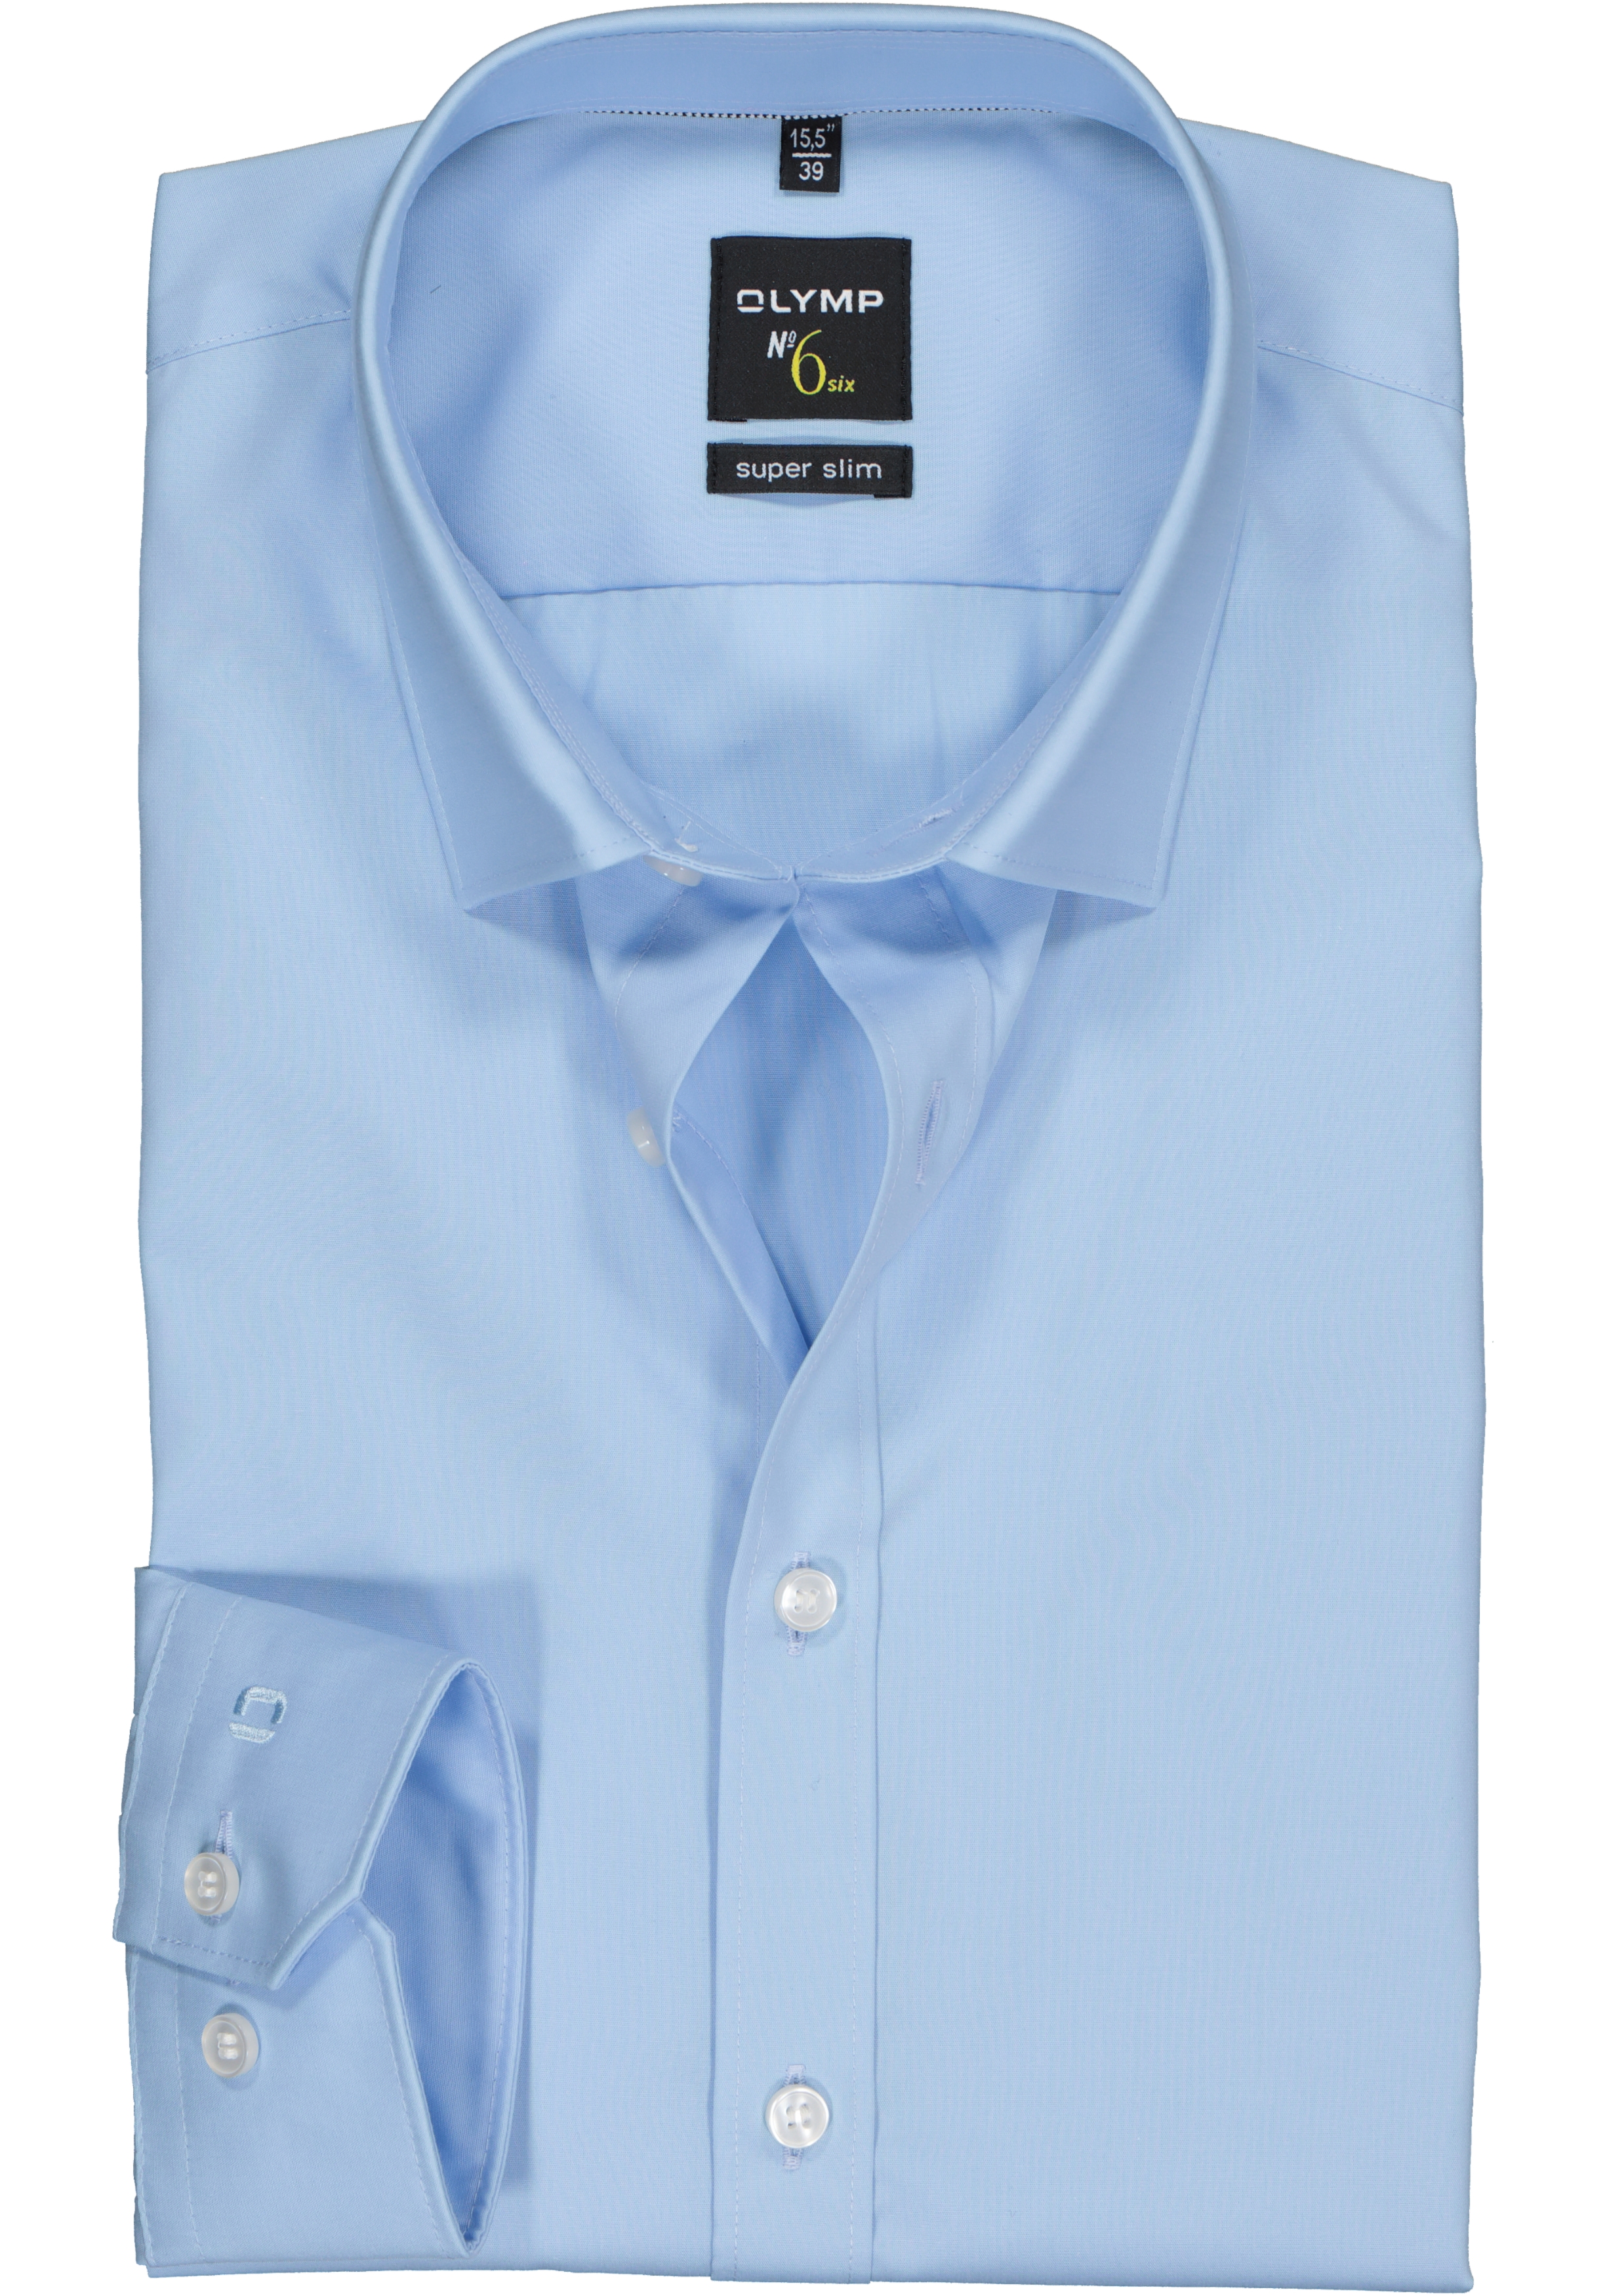 OLYMP No. Six super slim fit overhemd, mouwlengte 7, lichtblauw